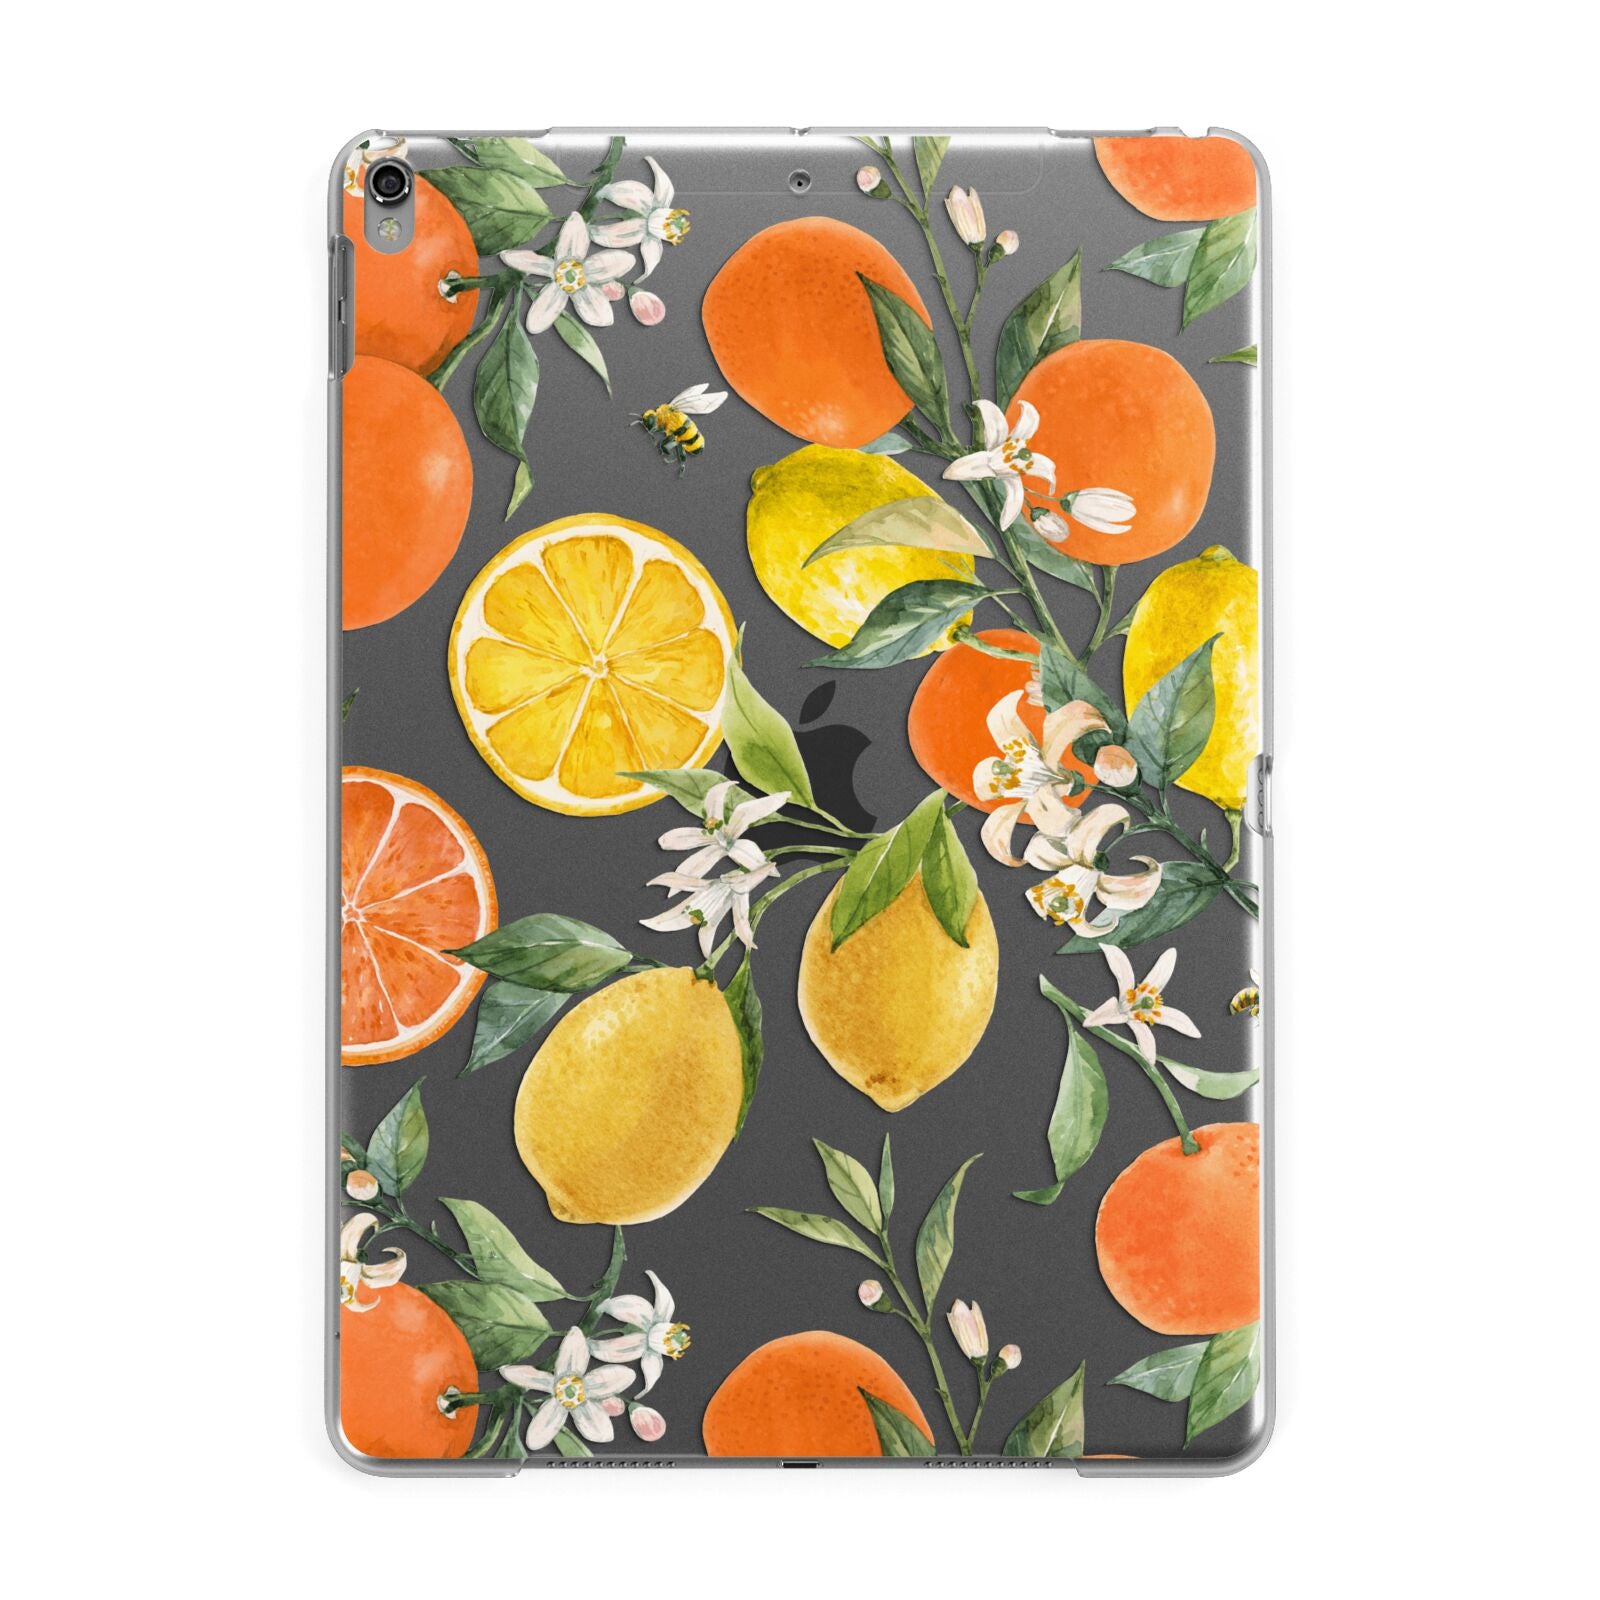 Lemons and Oranges Apple iPad Grey Case